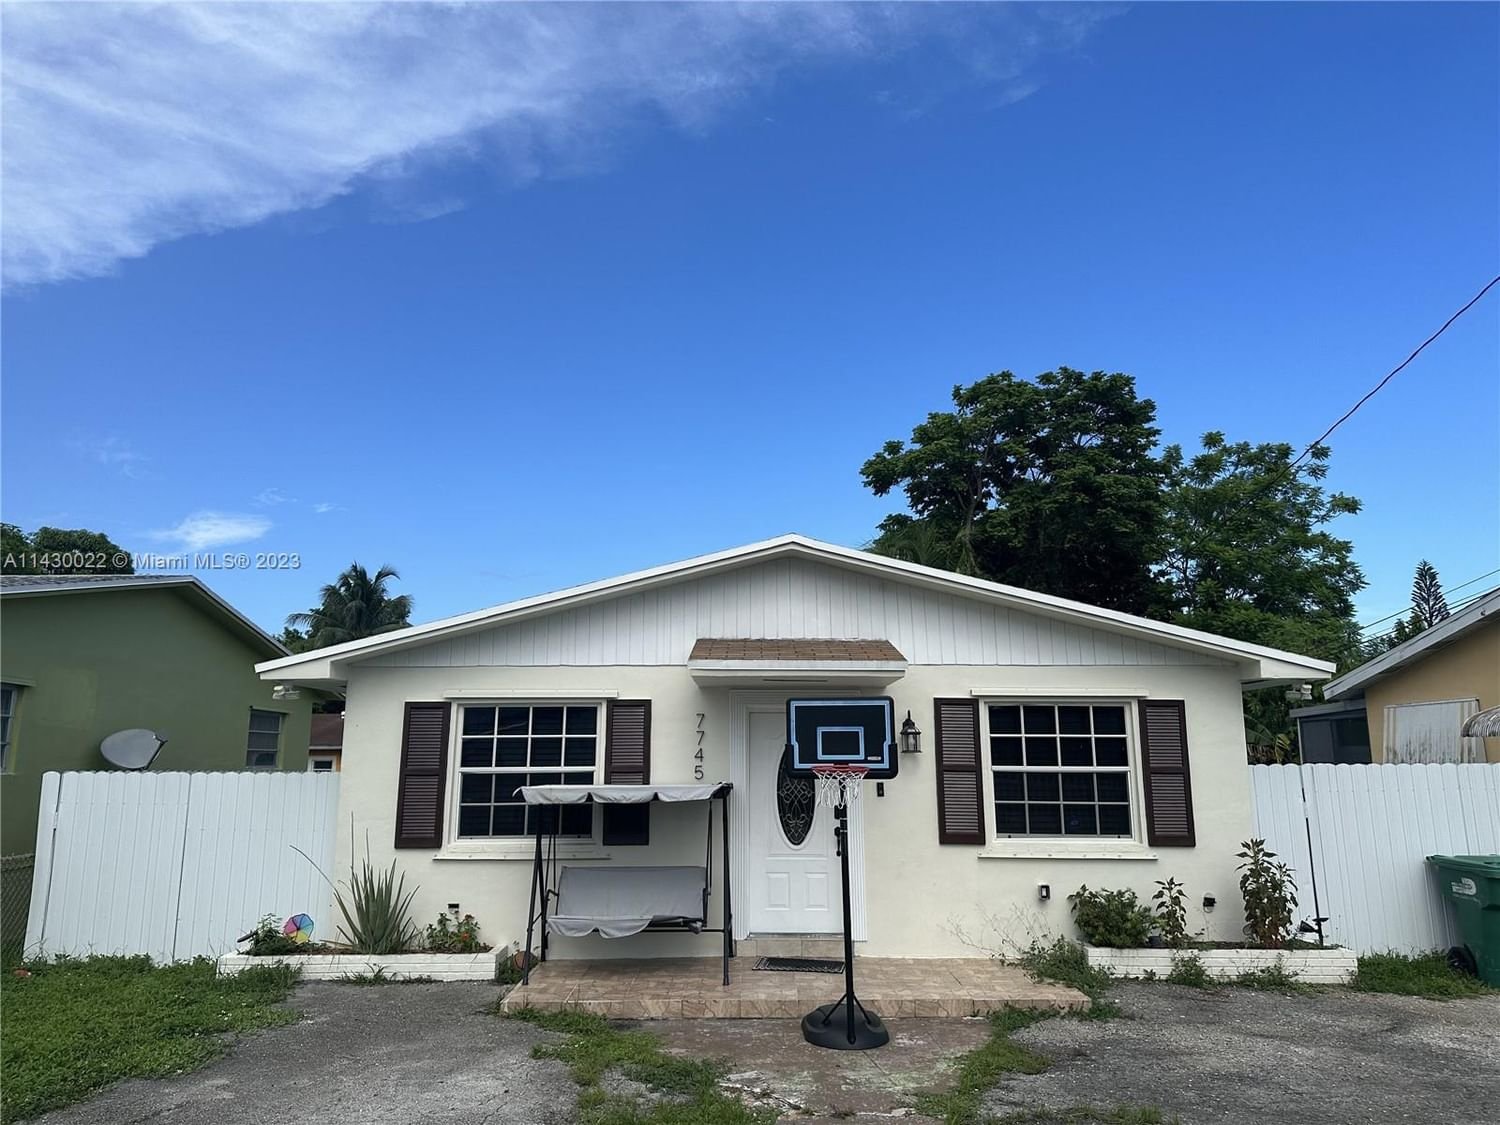 Real estate property located at 7745 10th Ave, Miami-Dade County, OHIO PARK, Miami, FL